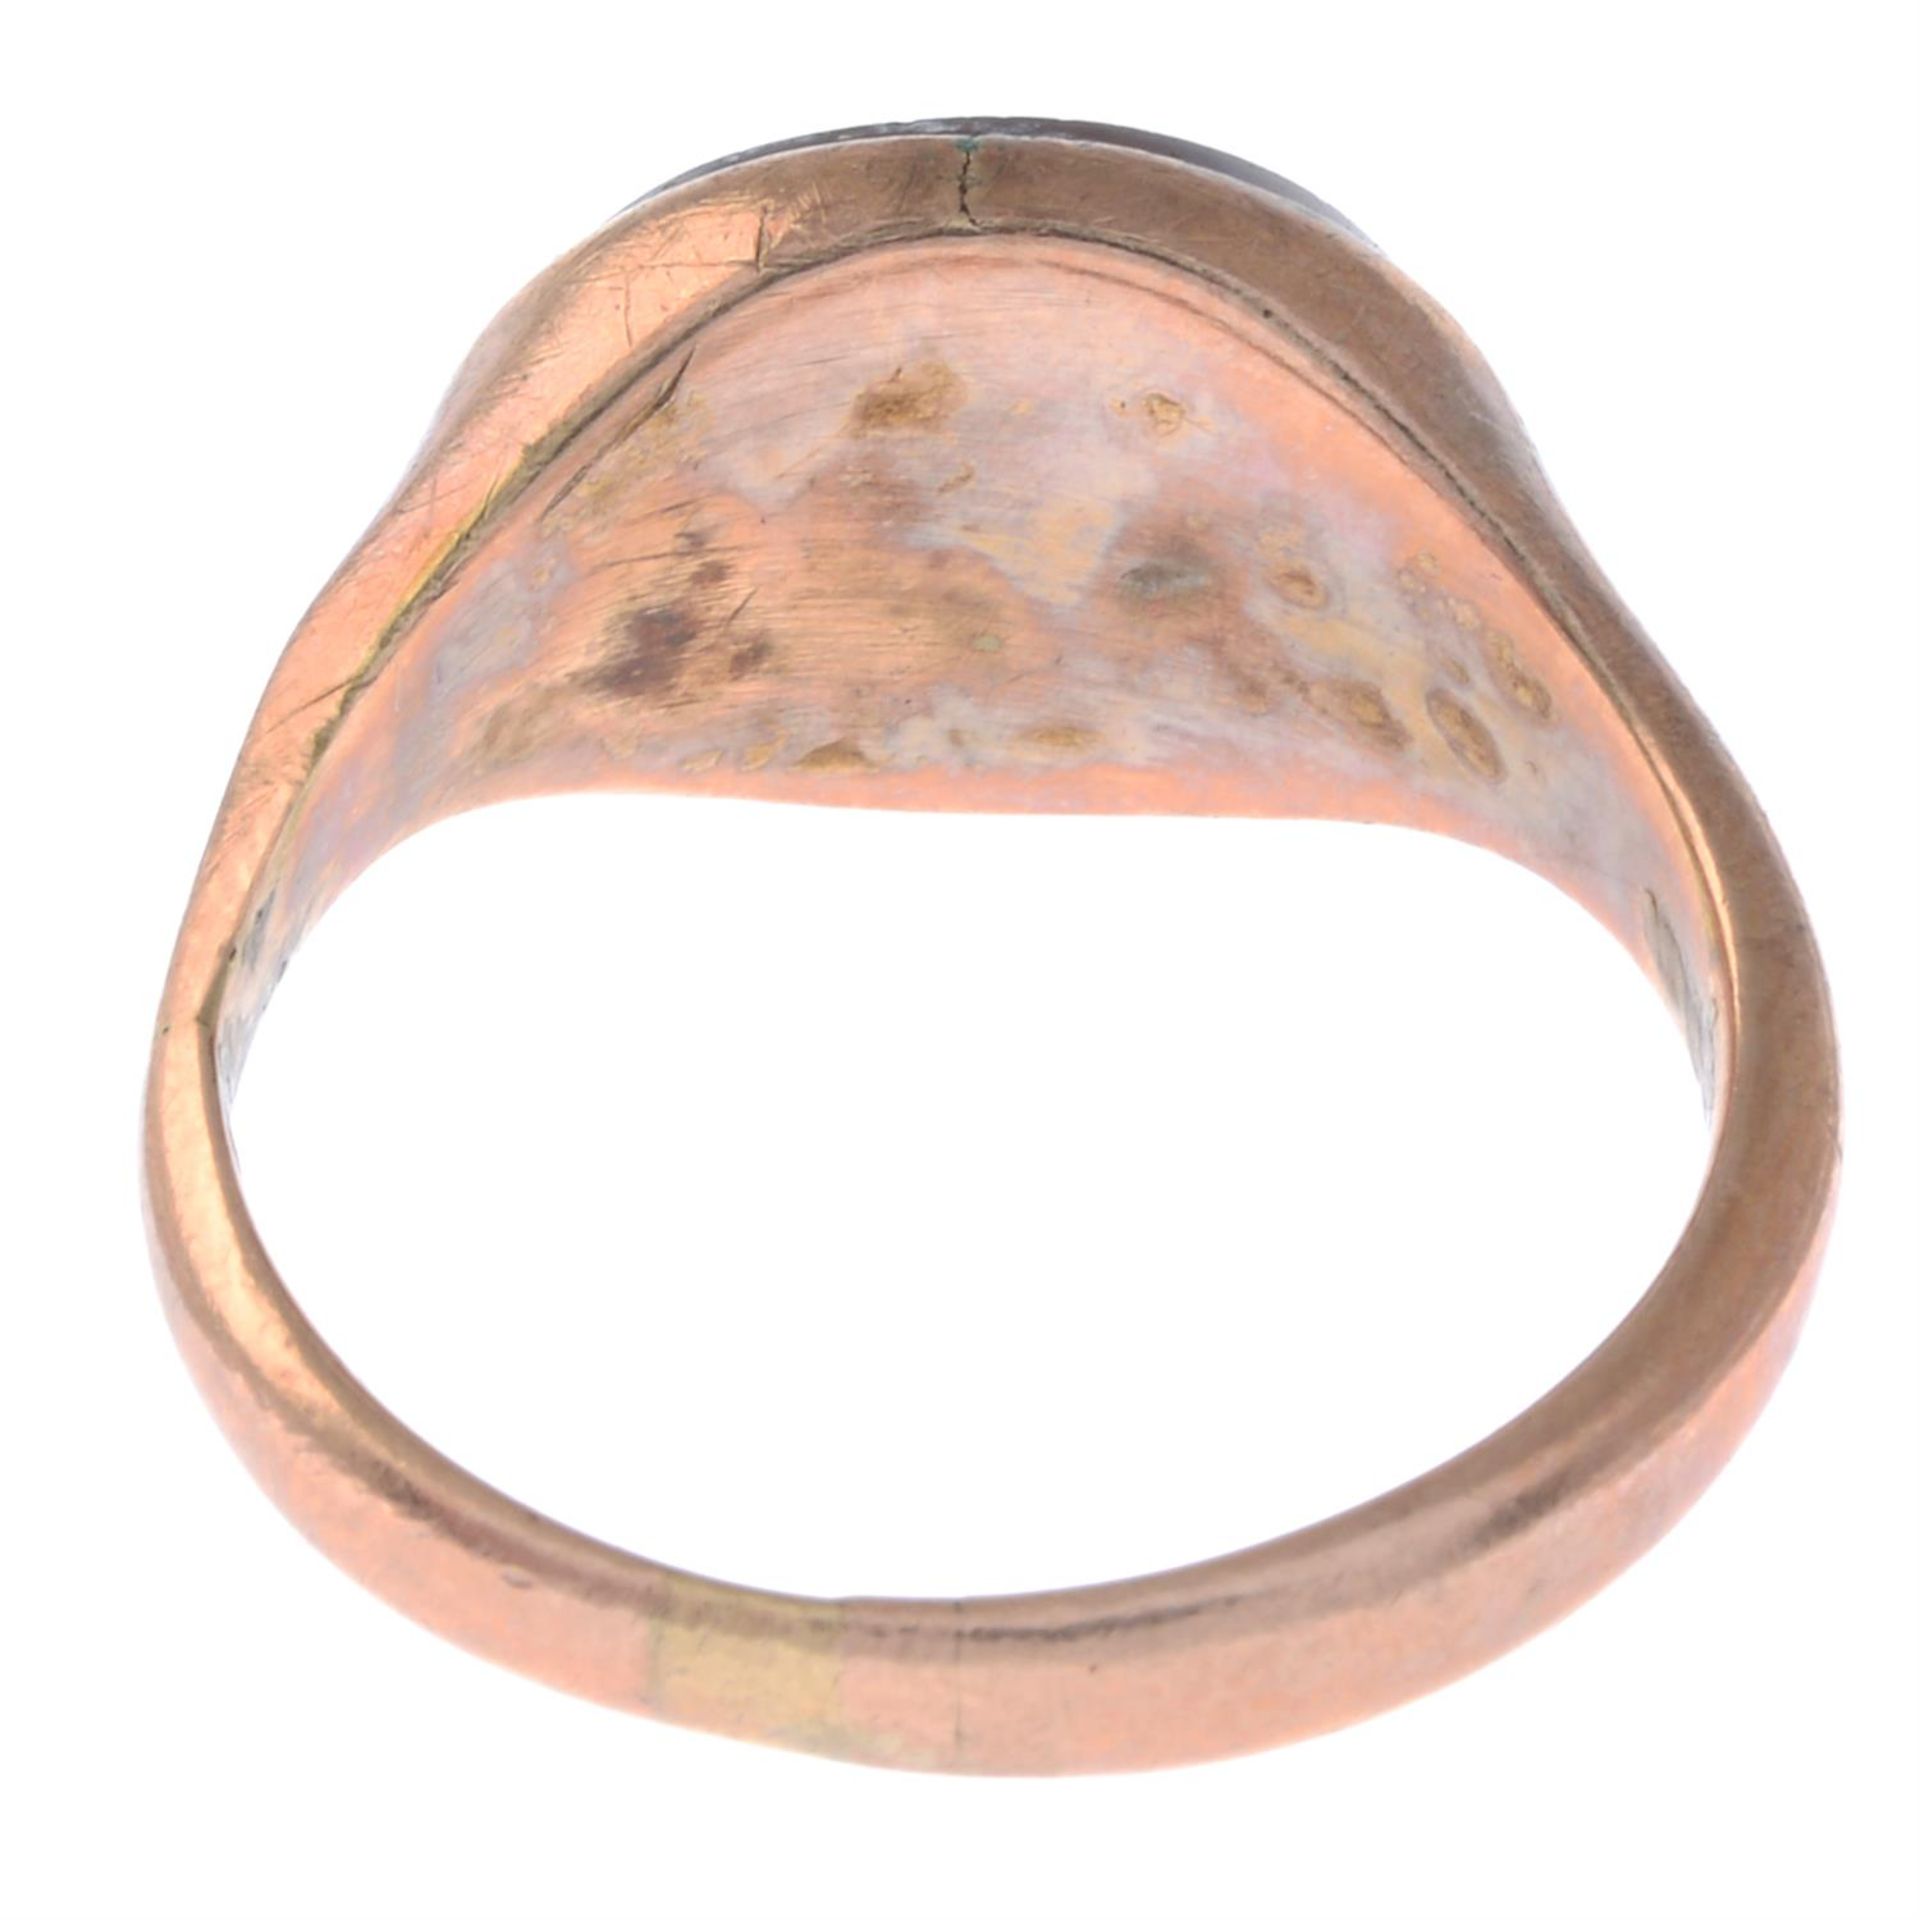 Carnelian signet ring - Image 2 of 2